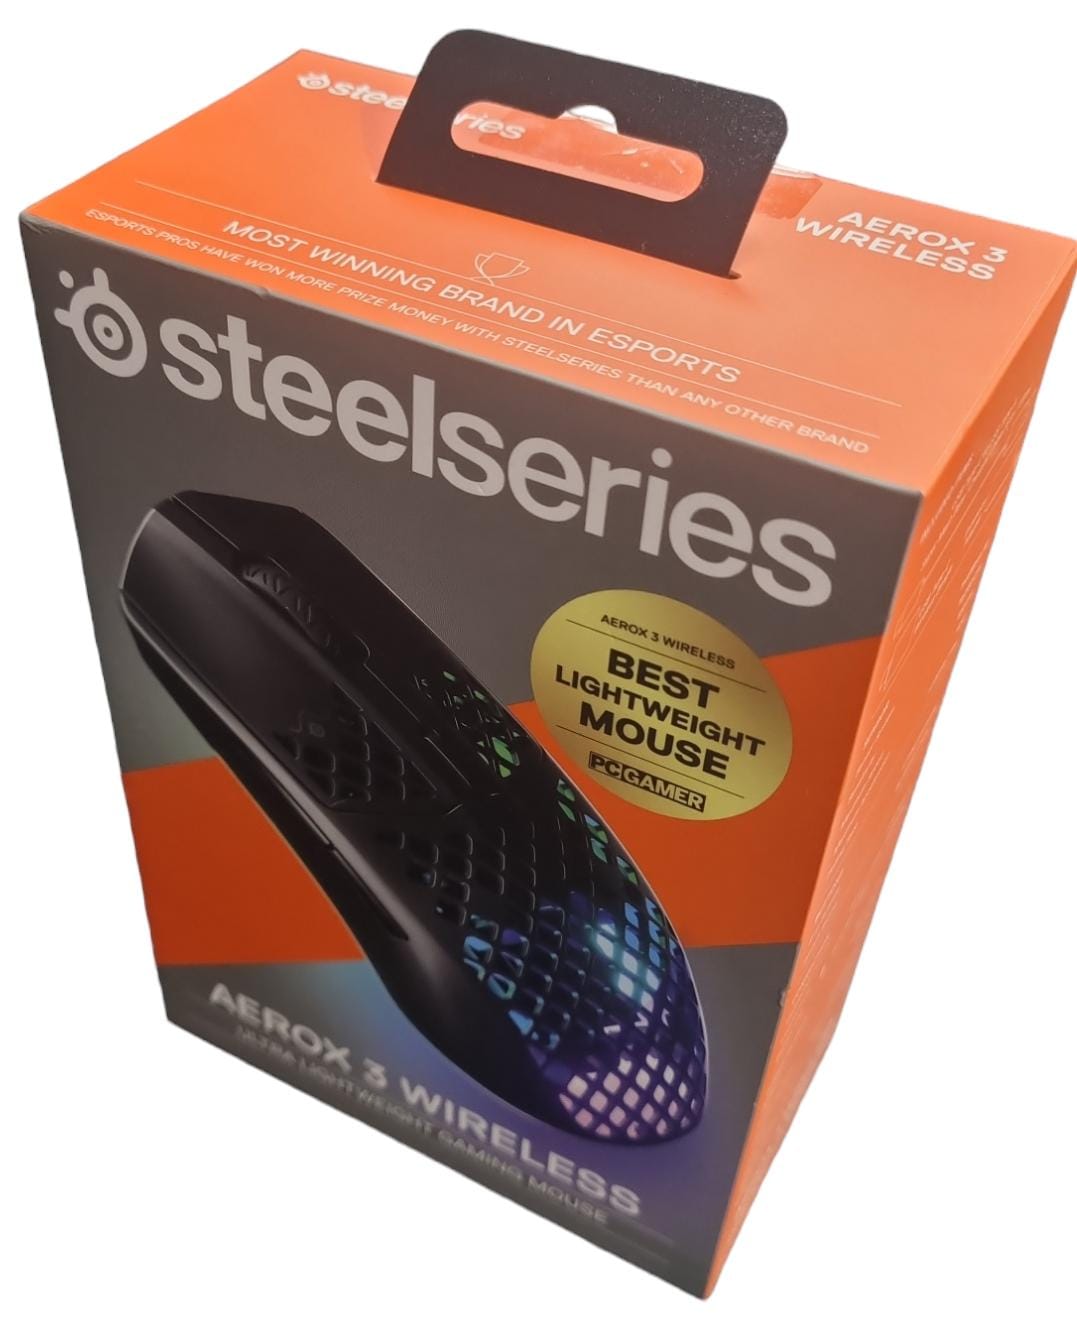 Steel Series Aerox 3 Ultra Lightweight 59g USB-C RGB Gaming Mouse - Onyx - NEW